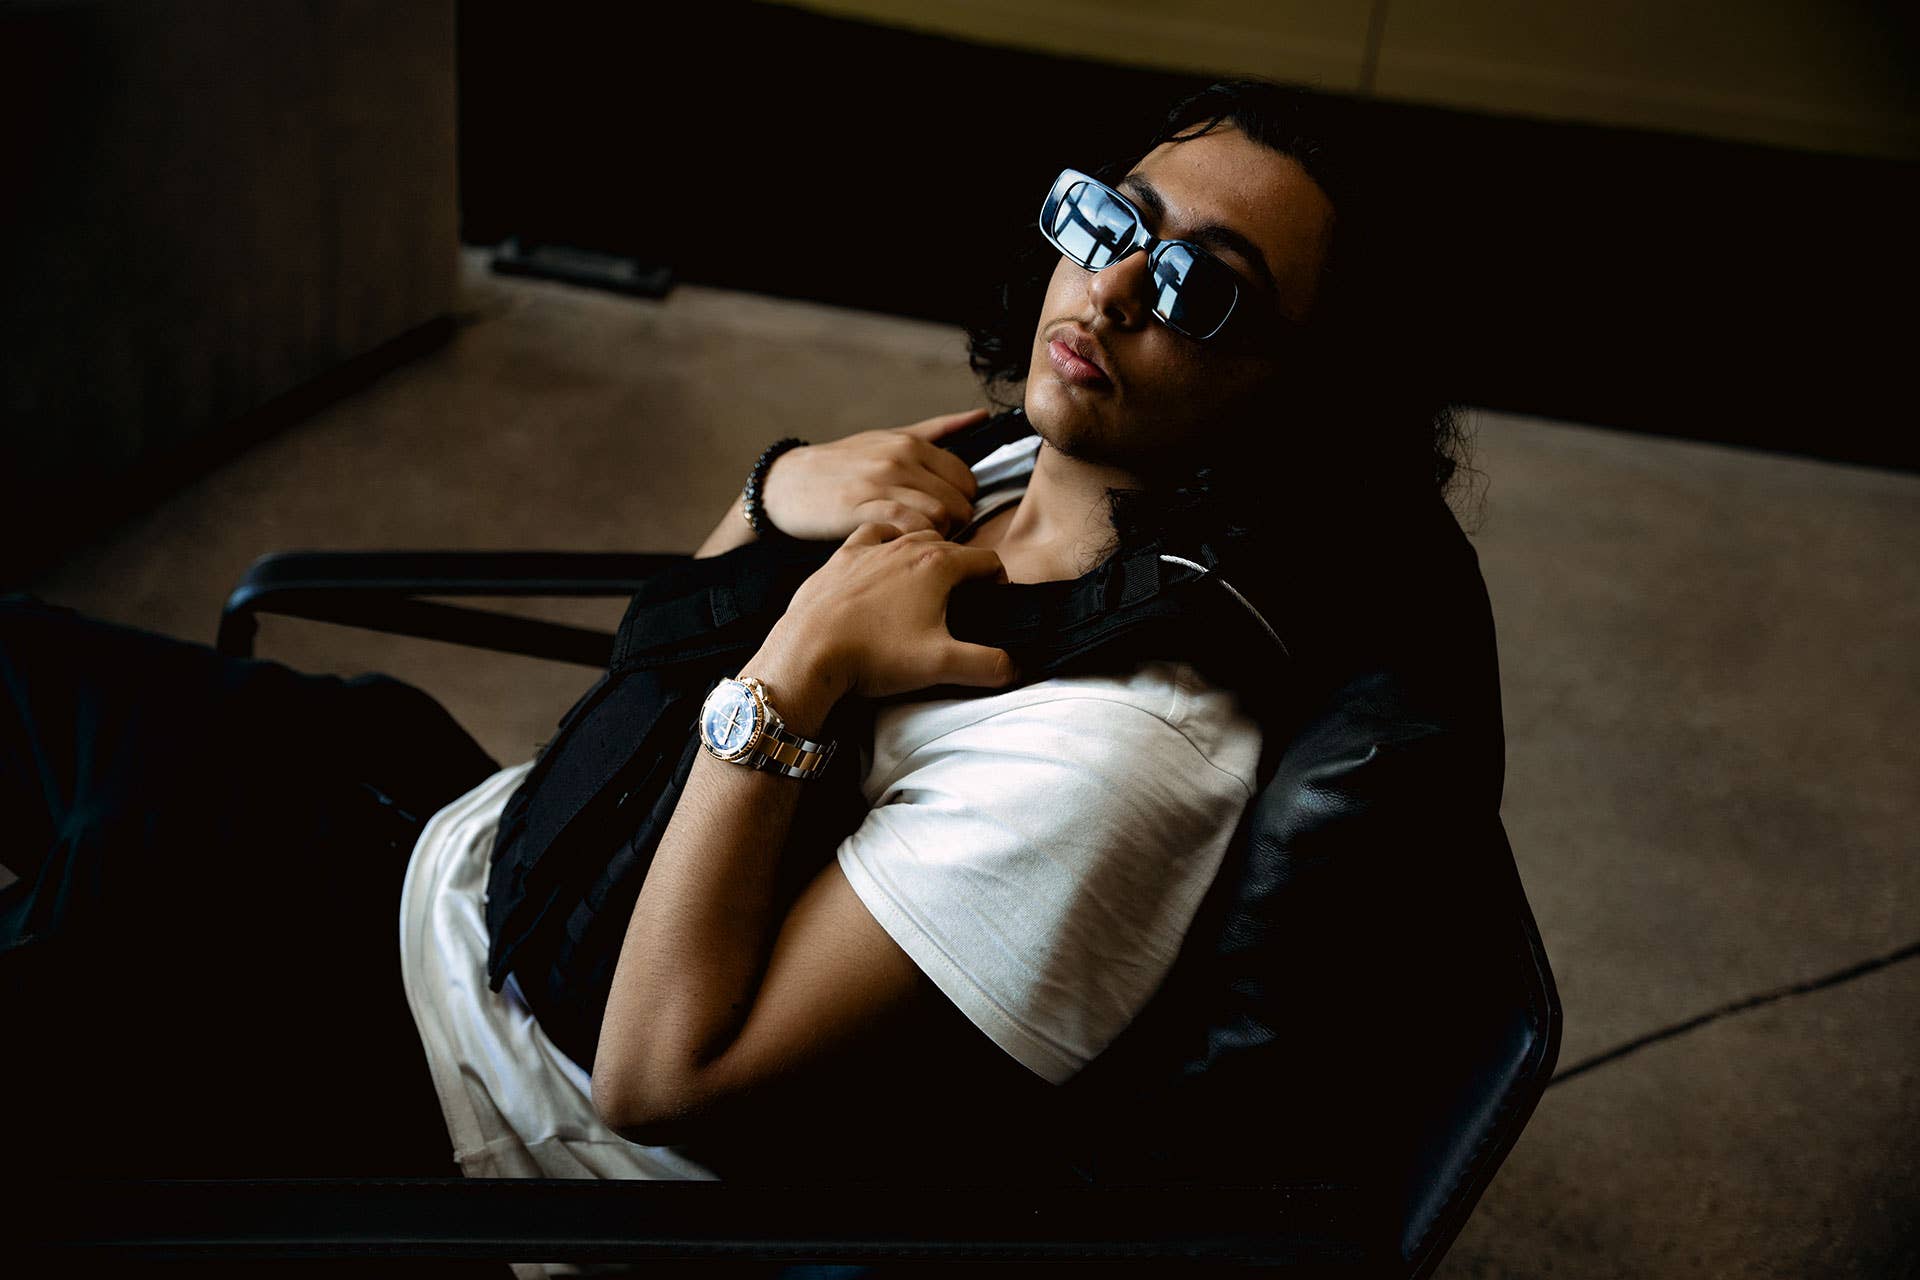 Toronto artist RealestK poses in dark sunglasses and vest